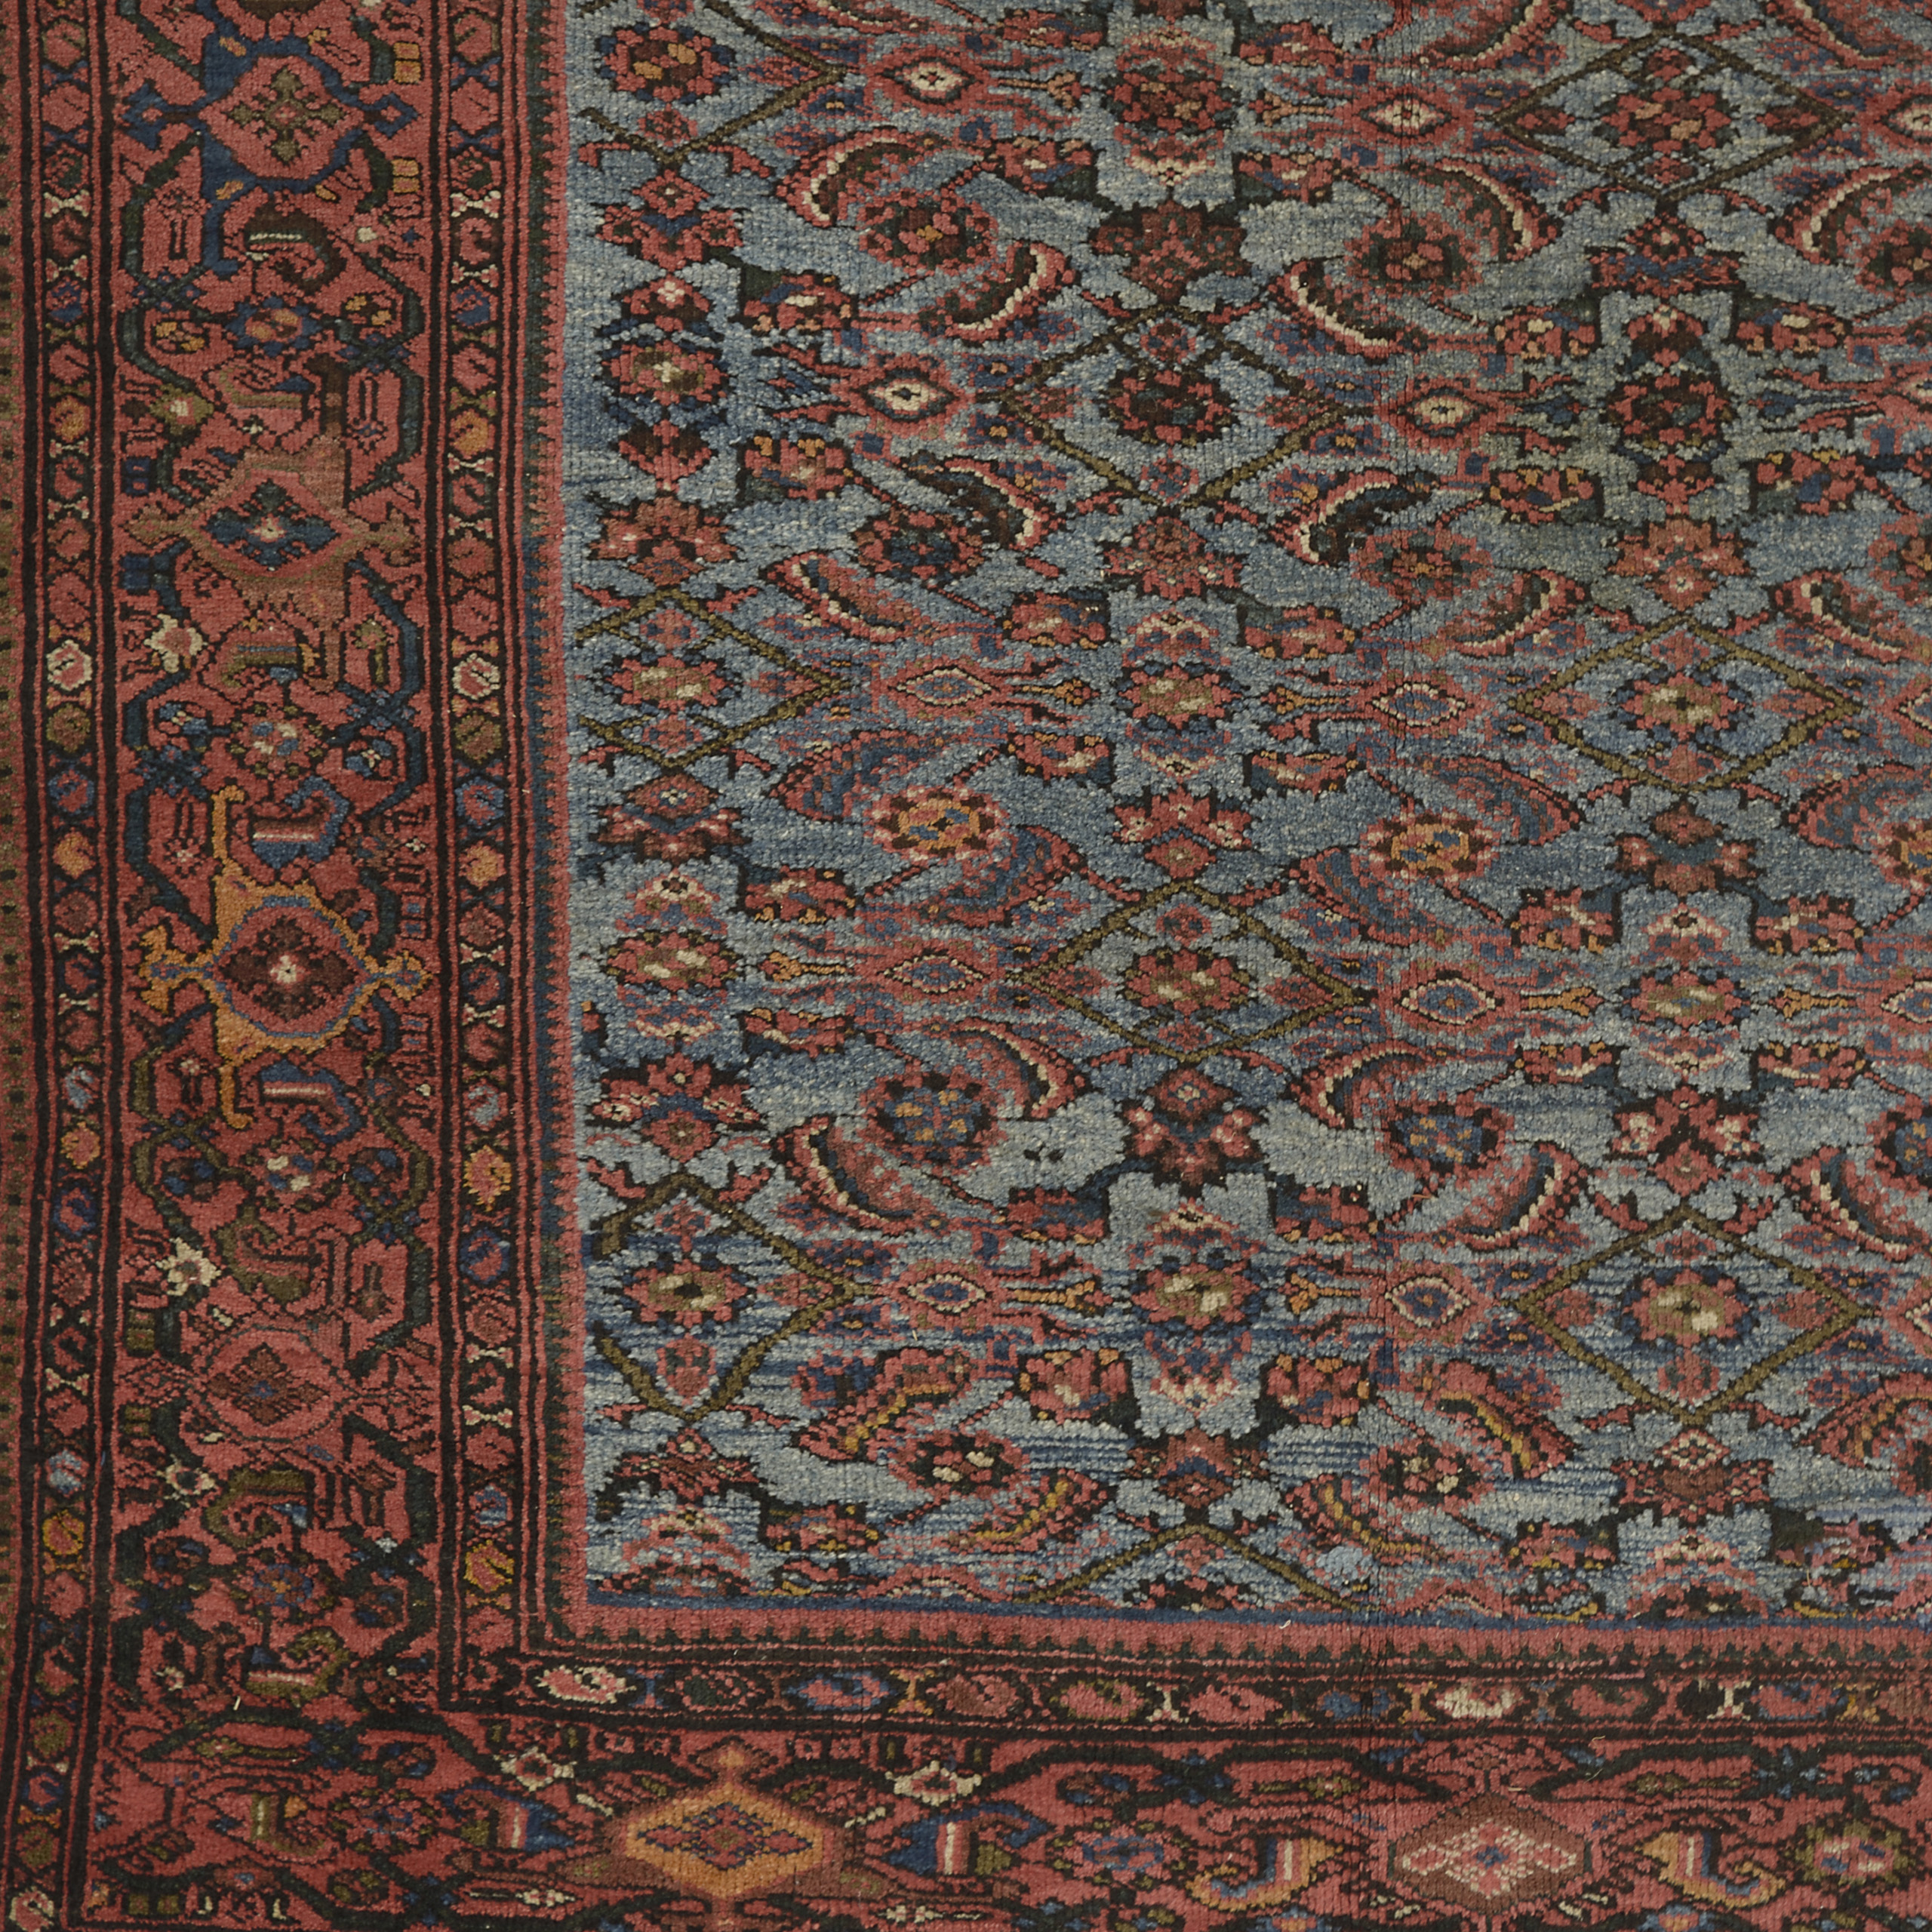 Persian Fereghan carpet section